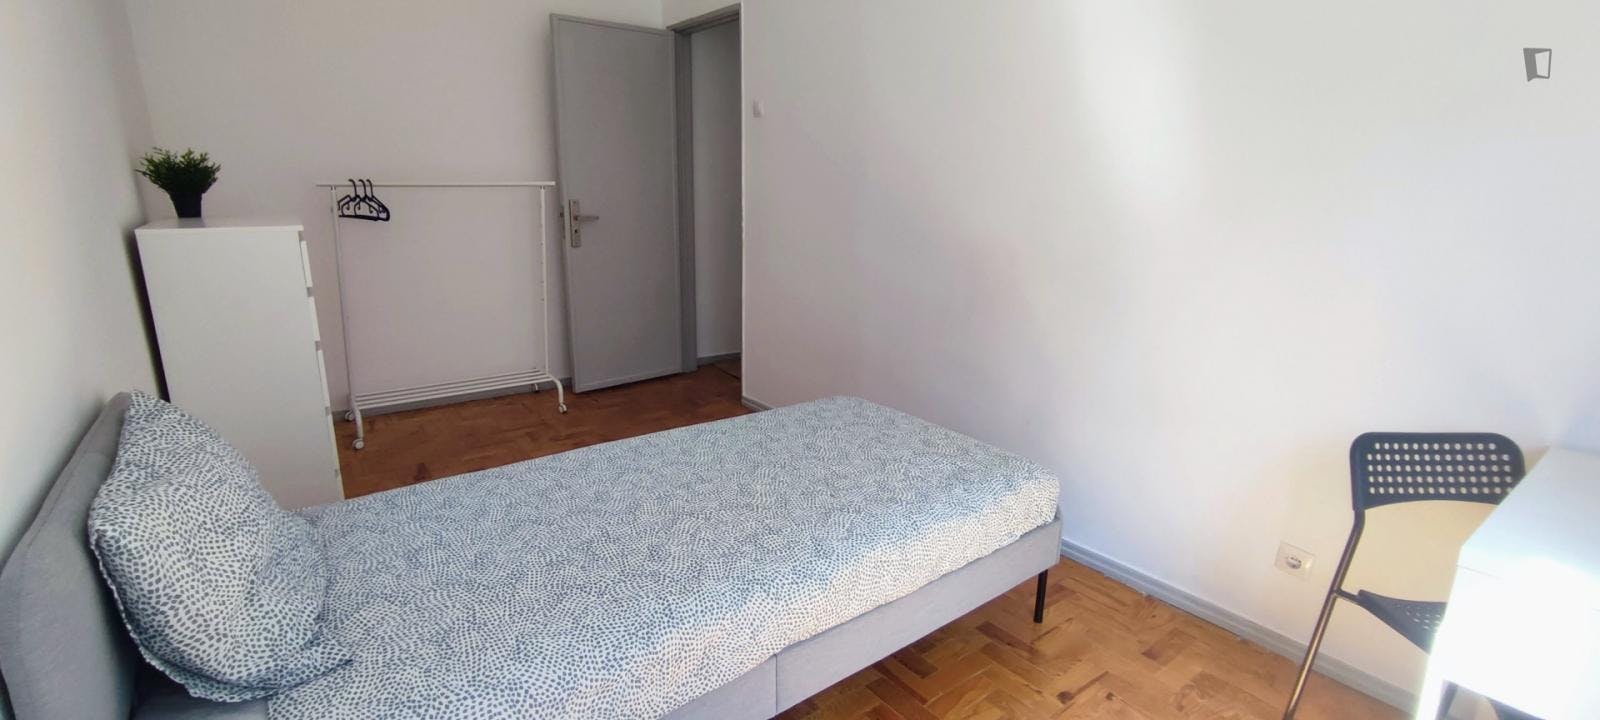 Cozy room in a 4-bedroom apartment